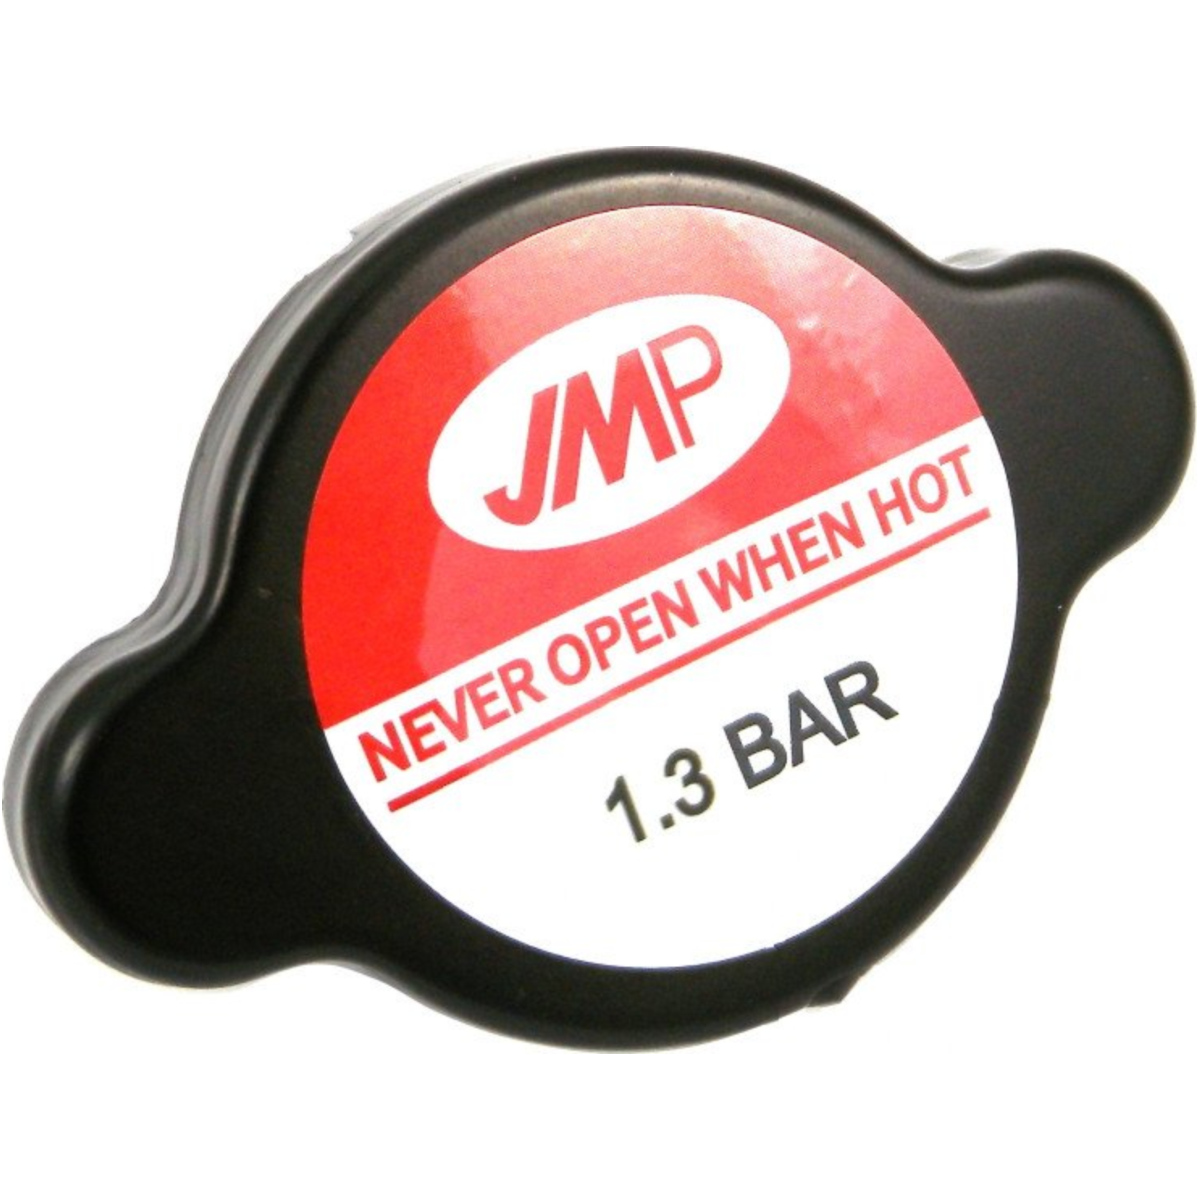 Jmp  kühlerdeckel 1.3 bar von JMP